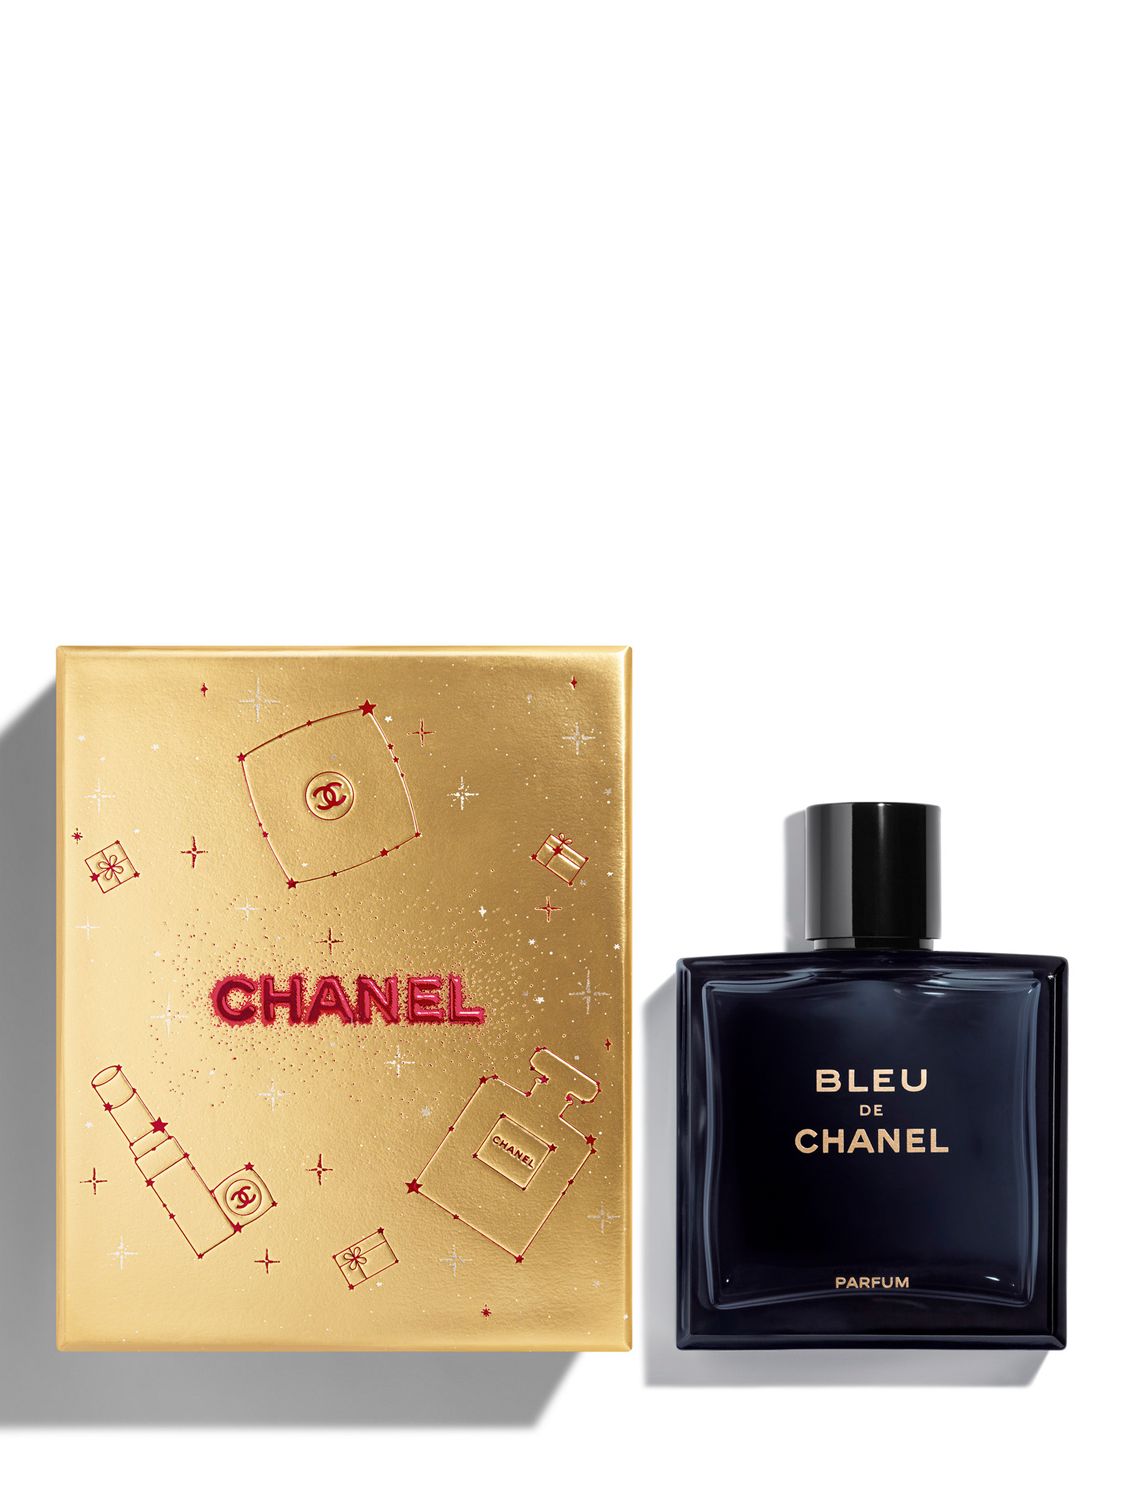 Bleu de Chanel – PC